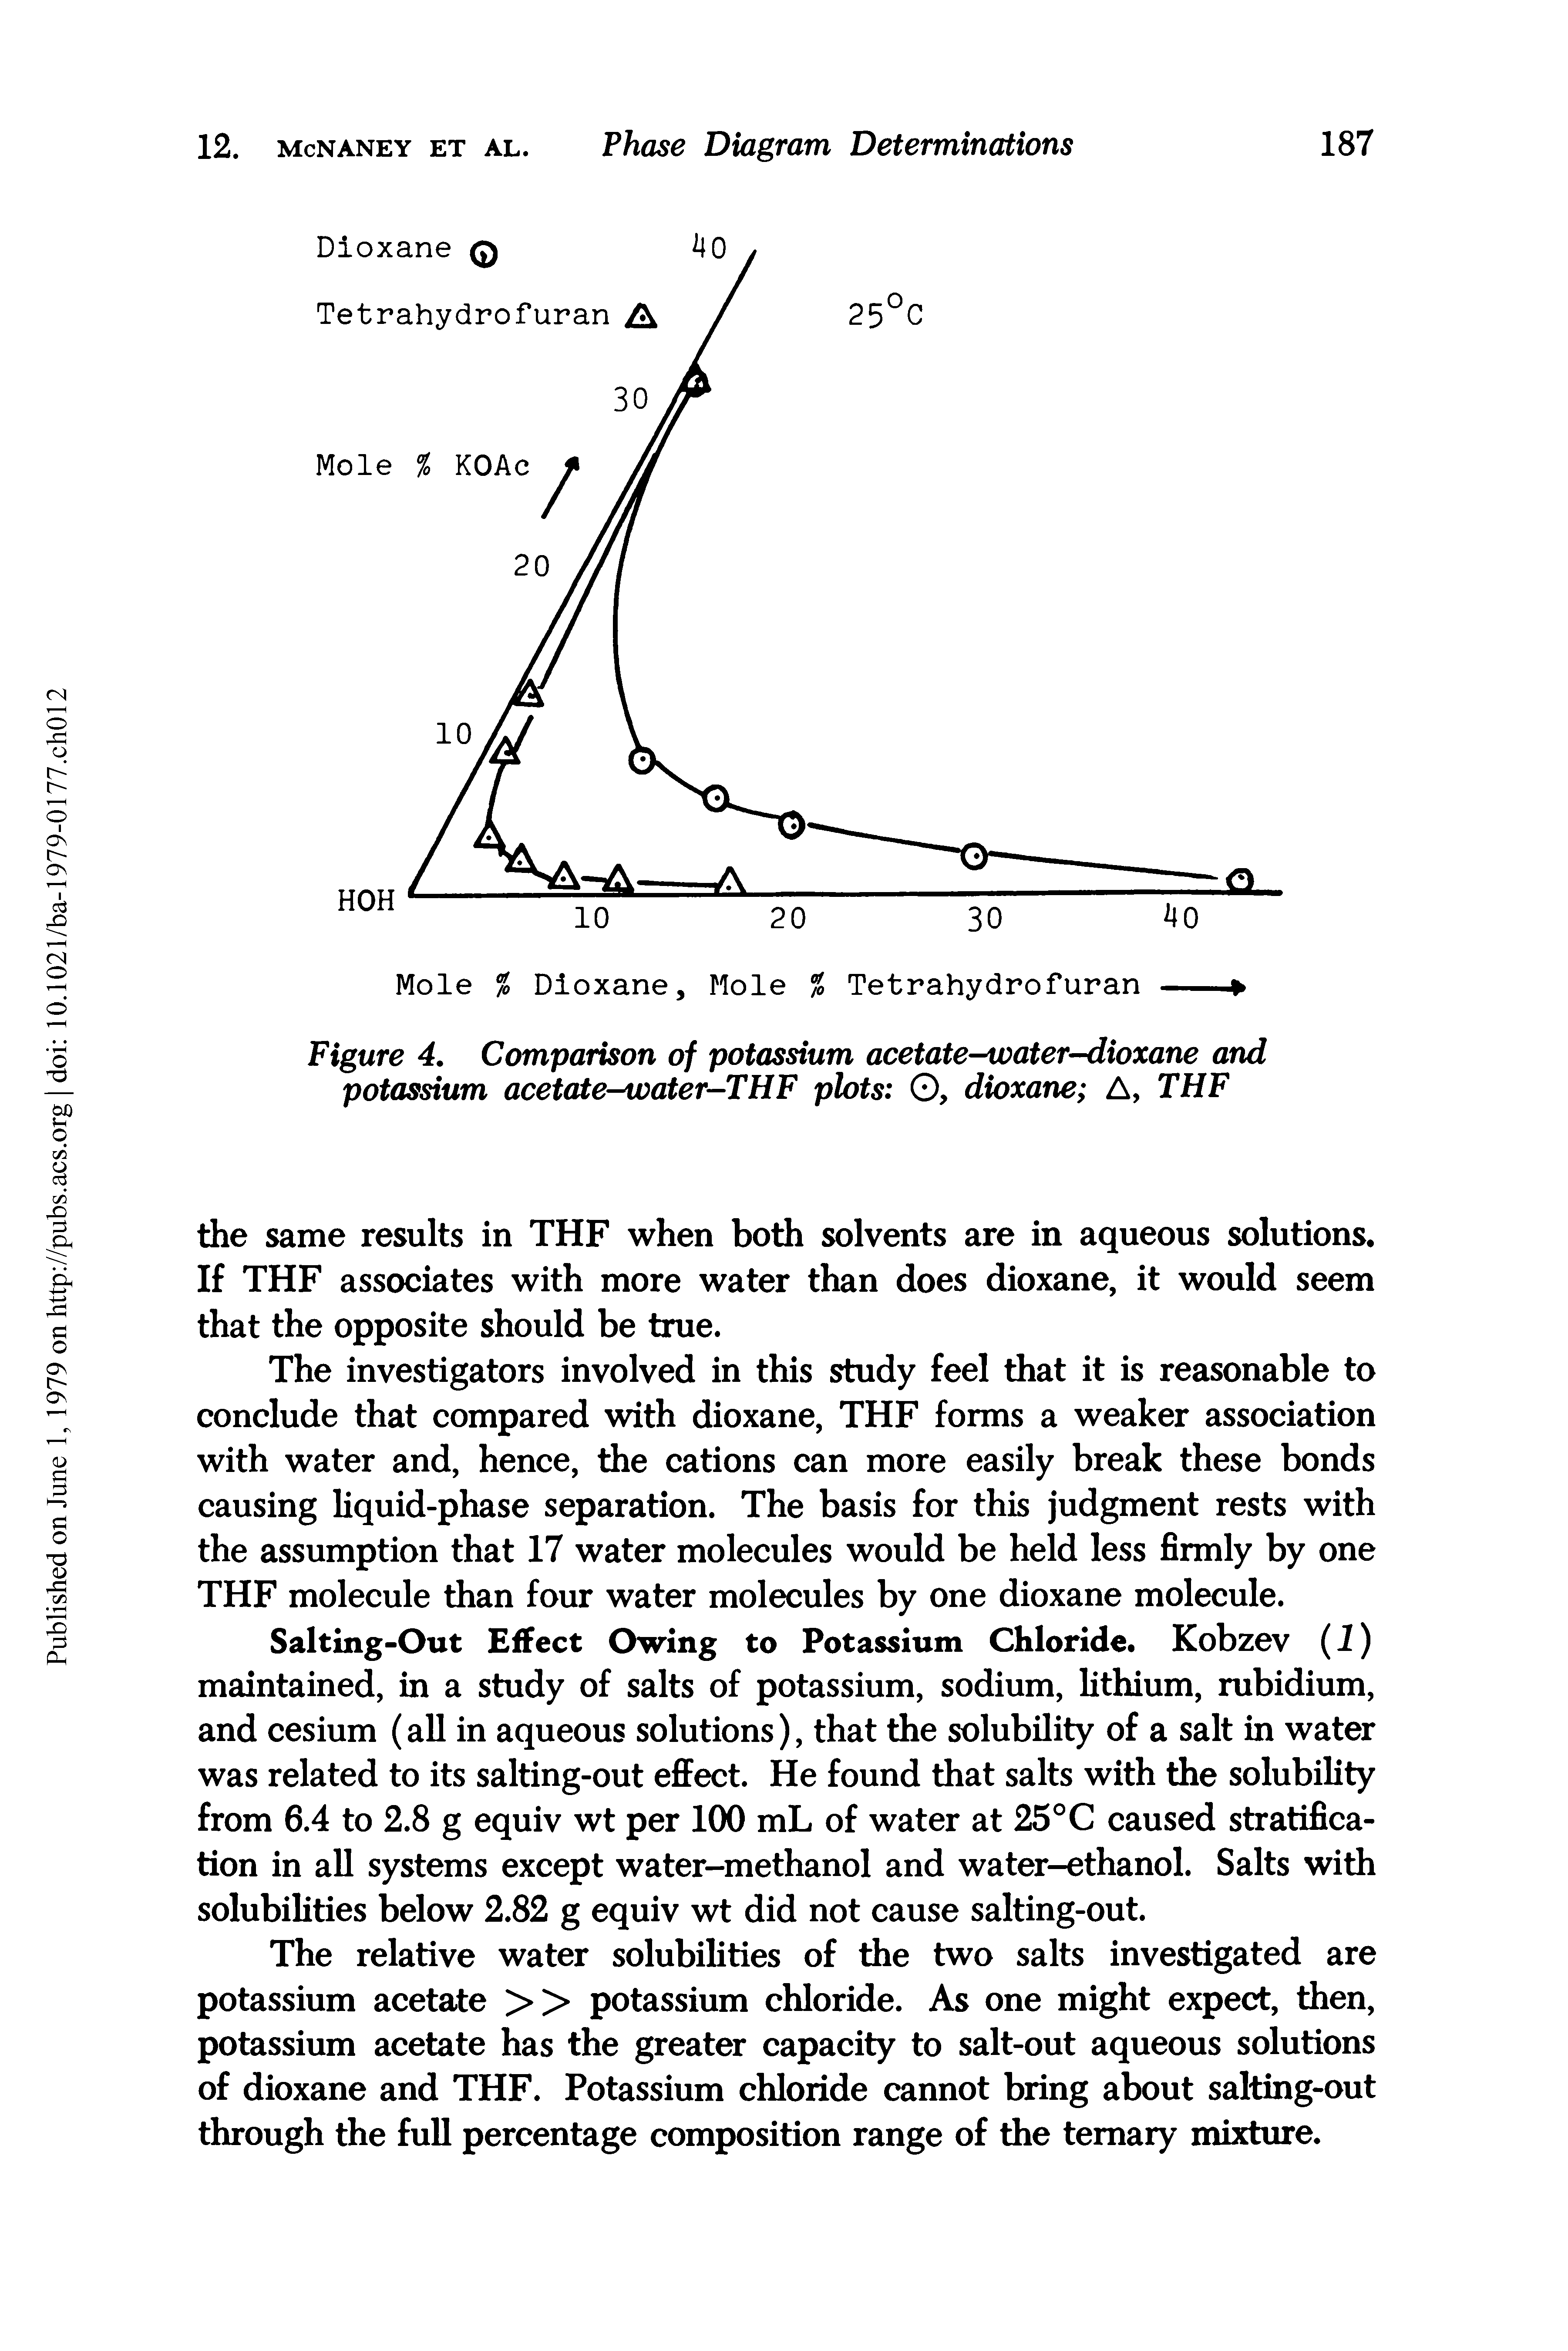 Figure 4. Comparison of potassium acetate-water-dioxane and potassium acetate-water-THF plots O, dioxane A, THF...